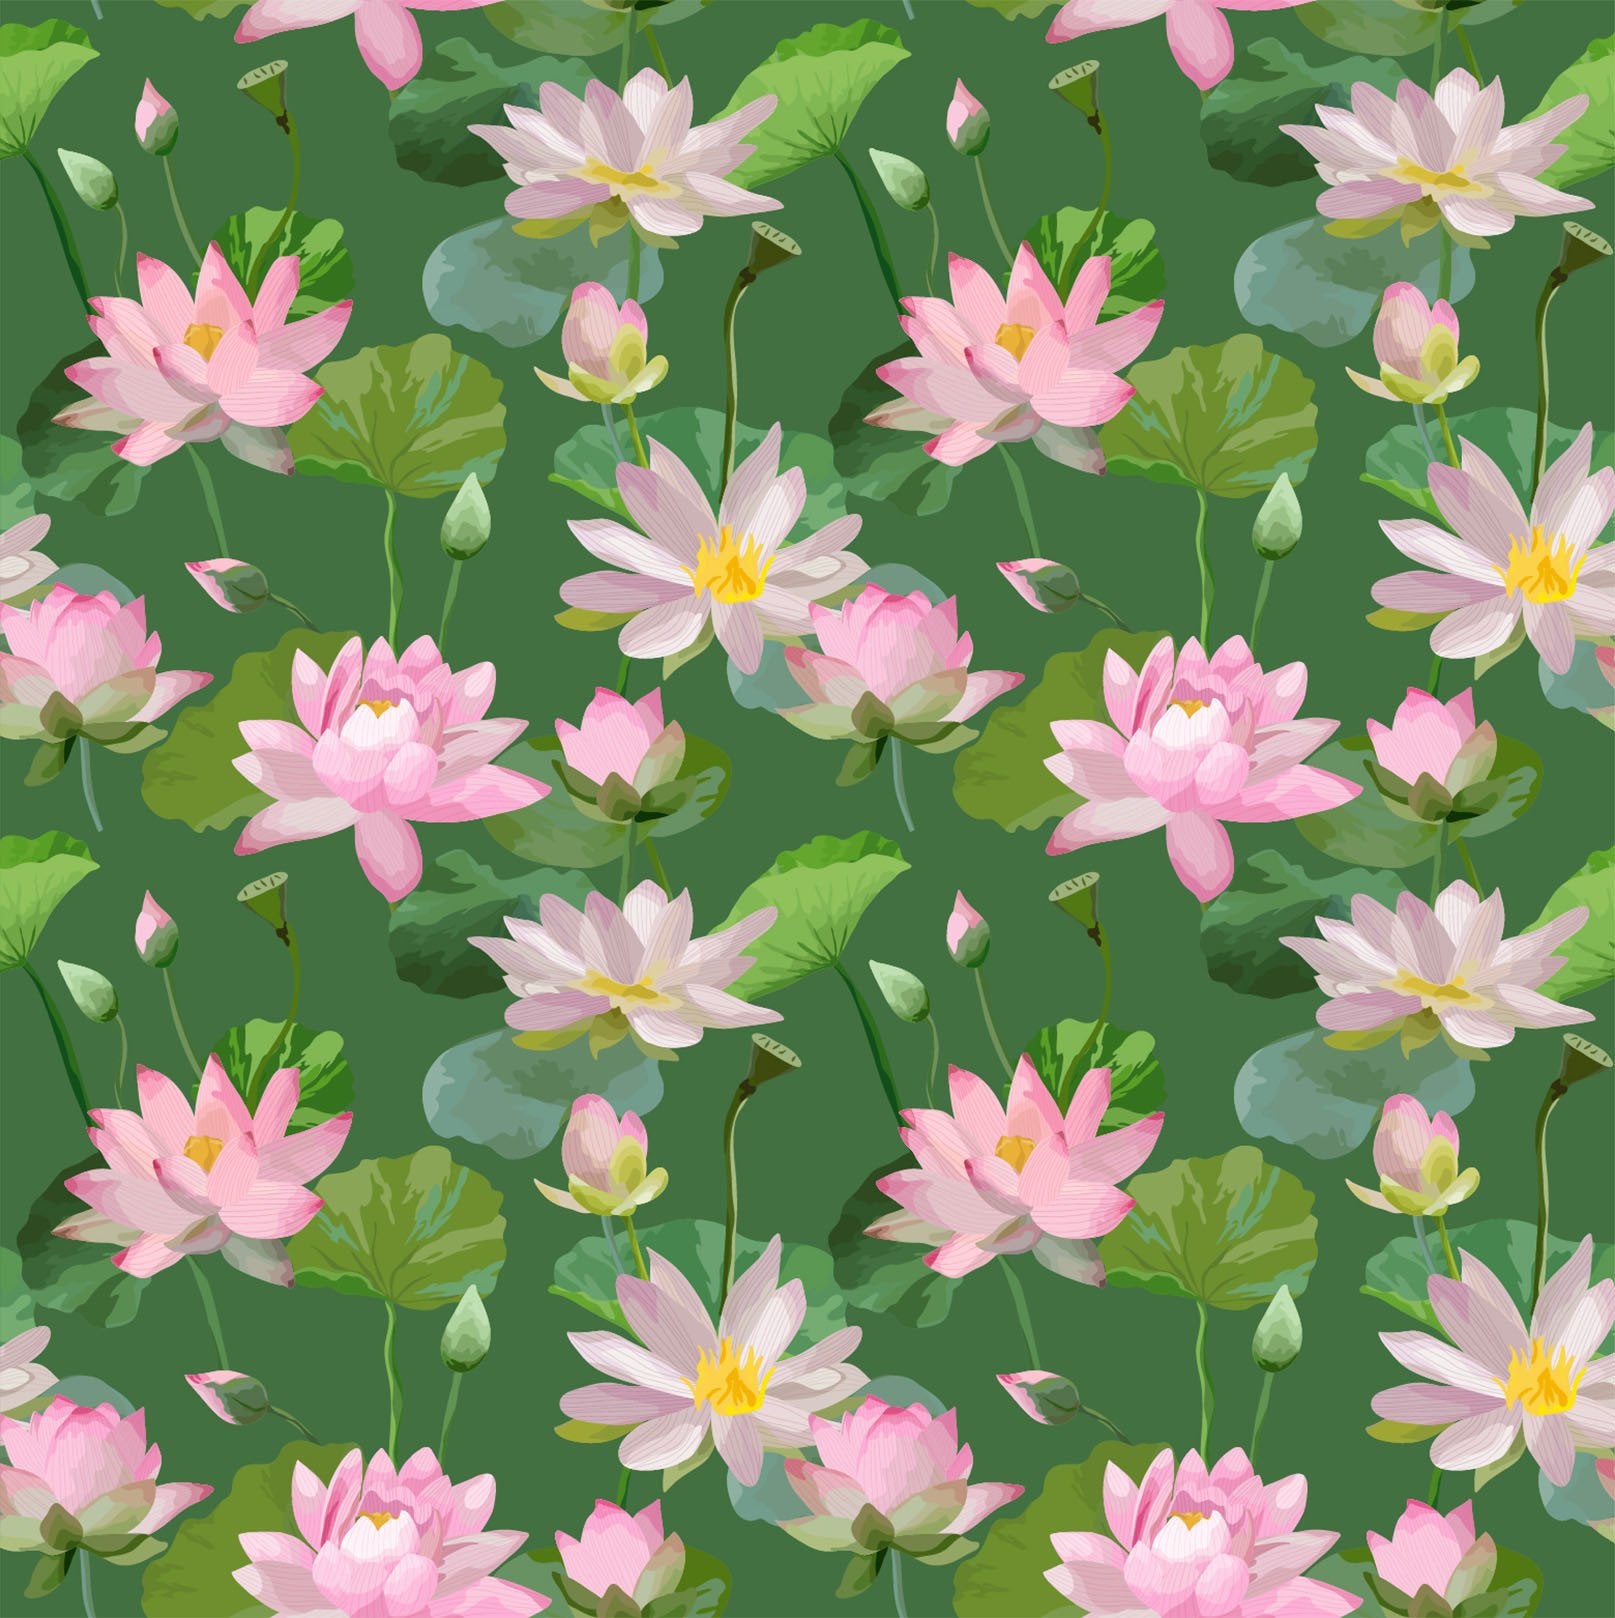 3D Lotus Flowers Pattern 1106 Stair Risers Wallpaper AJ Wallpaper 